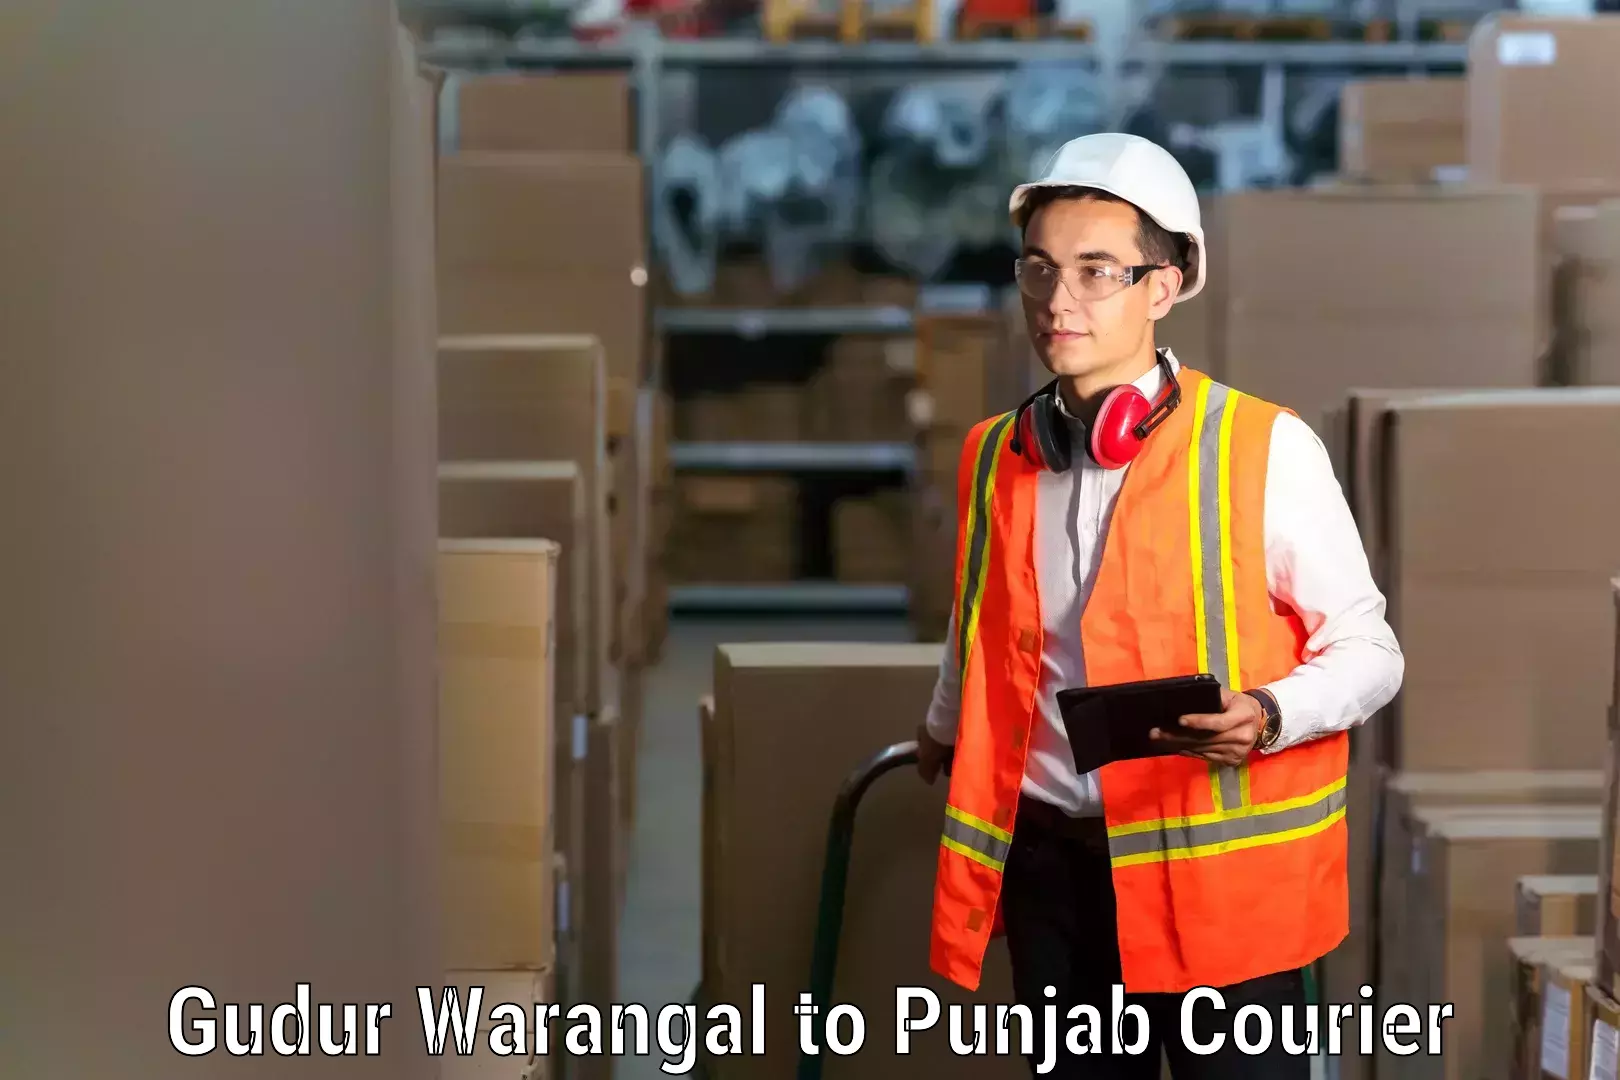 Moving service excellence in Gudur Warangal to Punjab